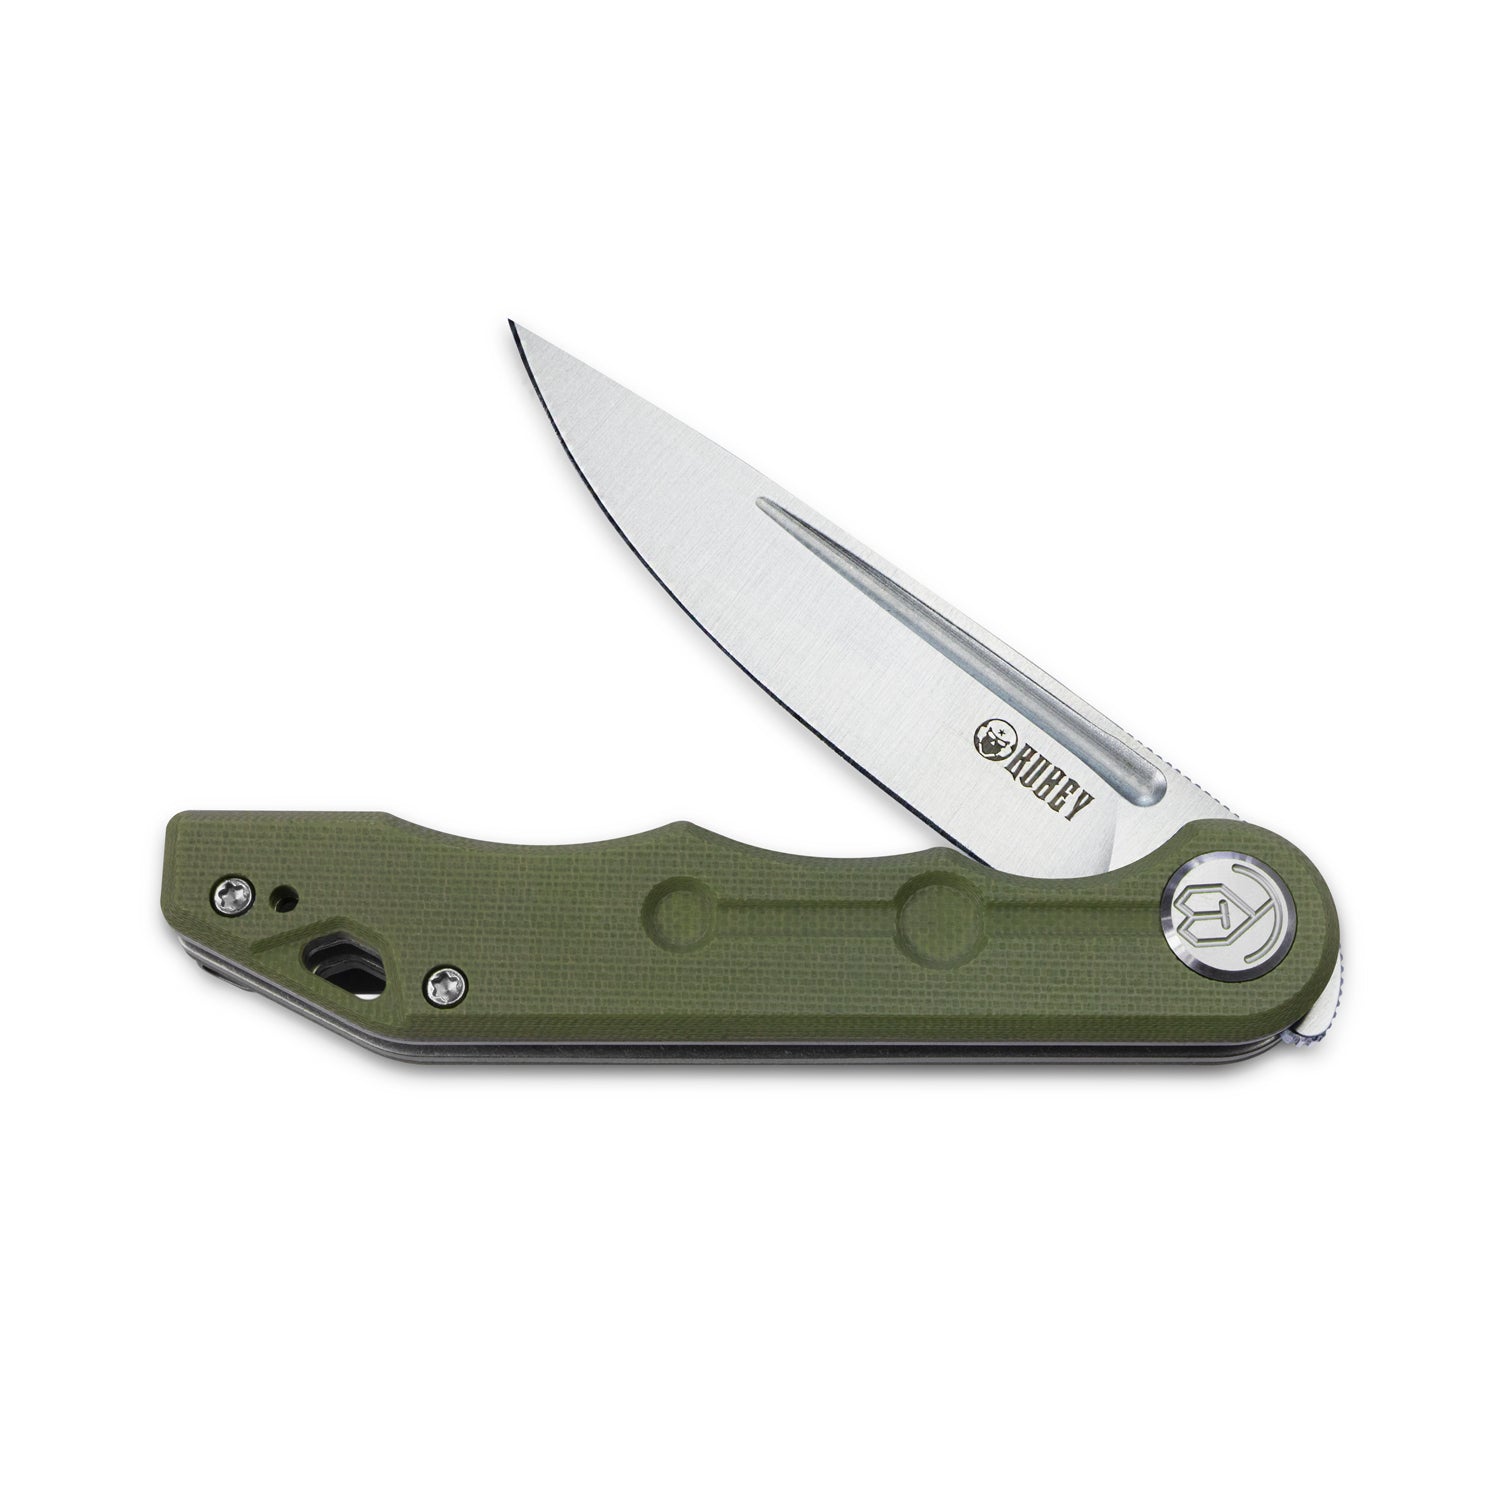 Kubey Mizo Liner Lock Front Flipper Folding Knife Green G10 Handle 3.15" Satin 14C28N KU2101D